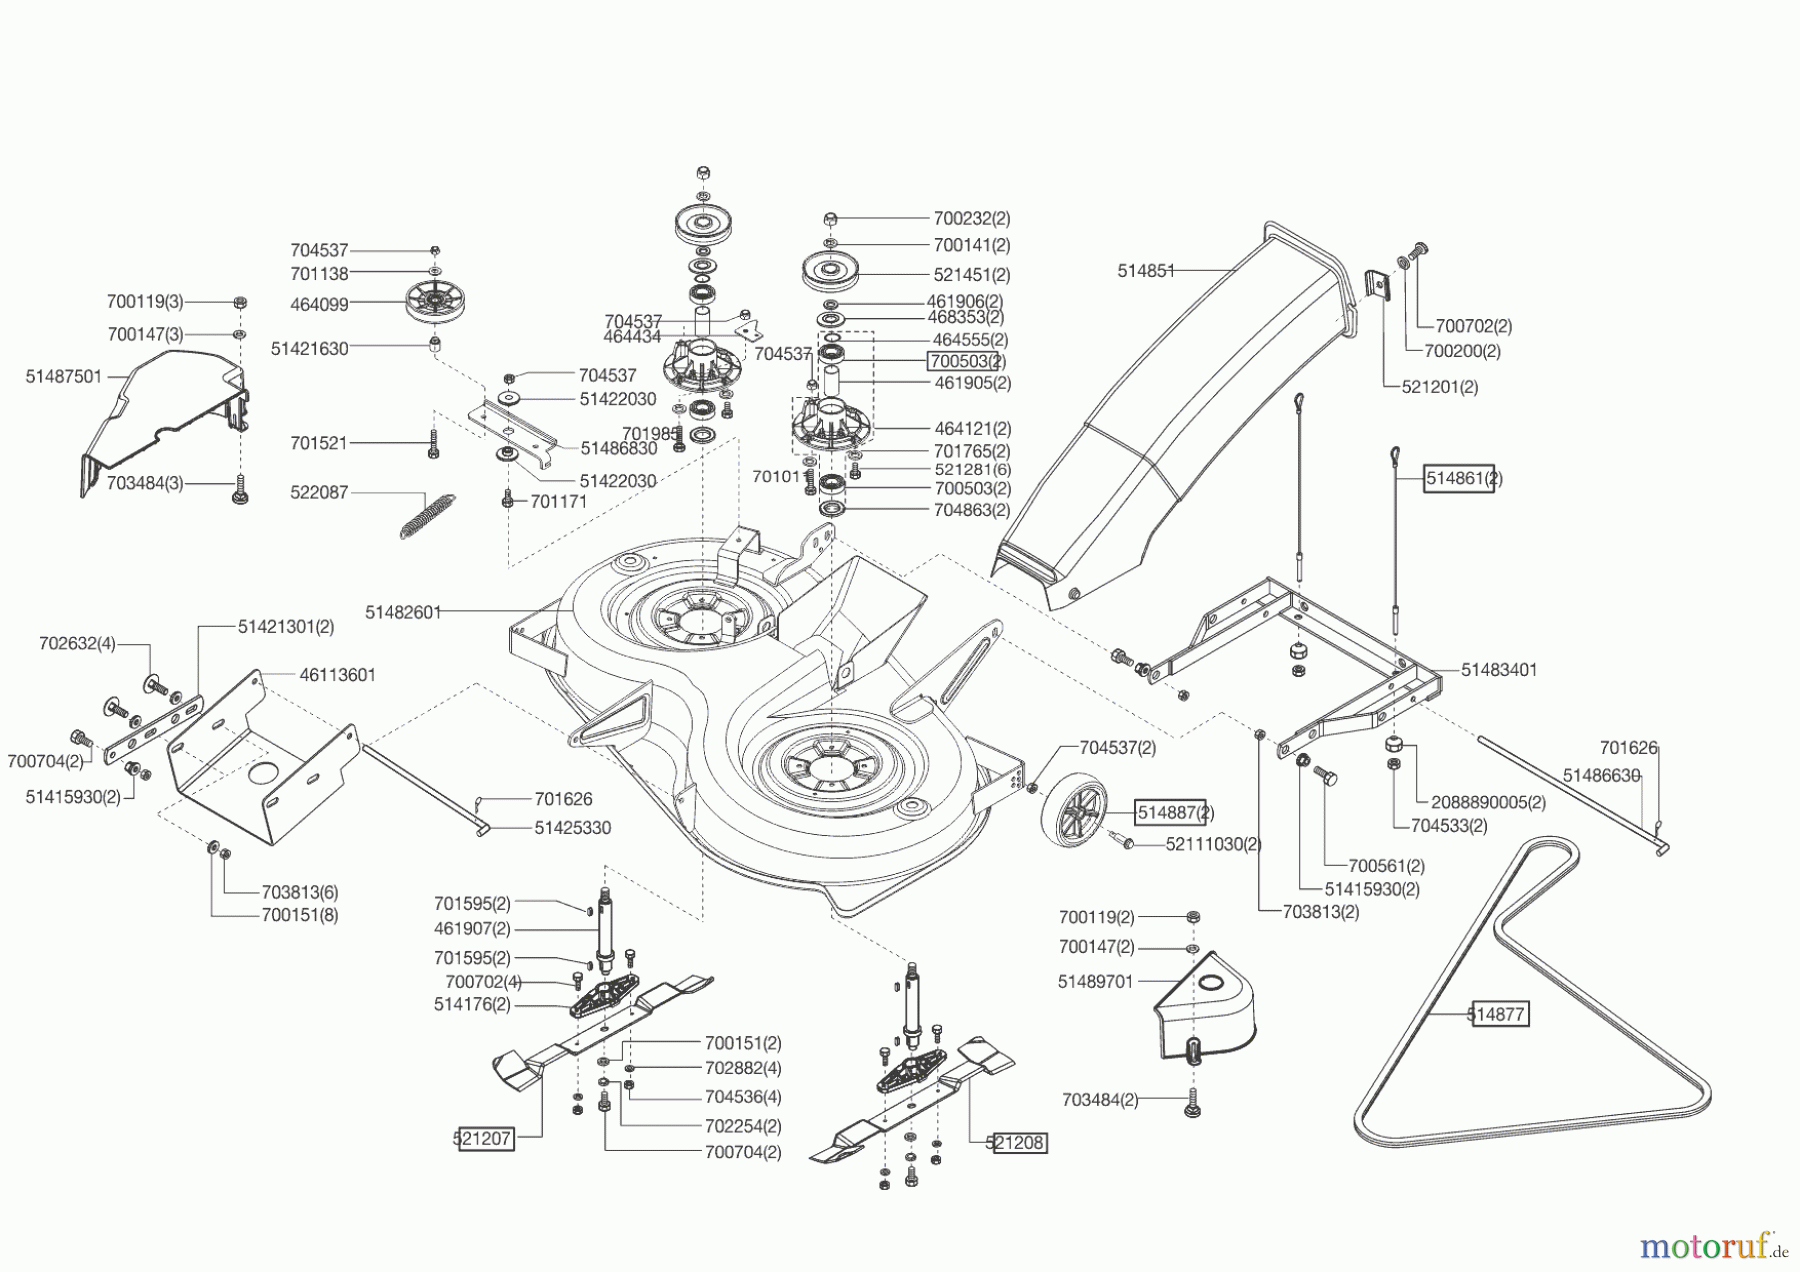  AL-KO Gartentechnik Rasentraktor T 20-102 HD Gulistan  ab 09/2016 Seite 5